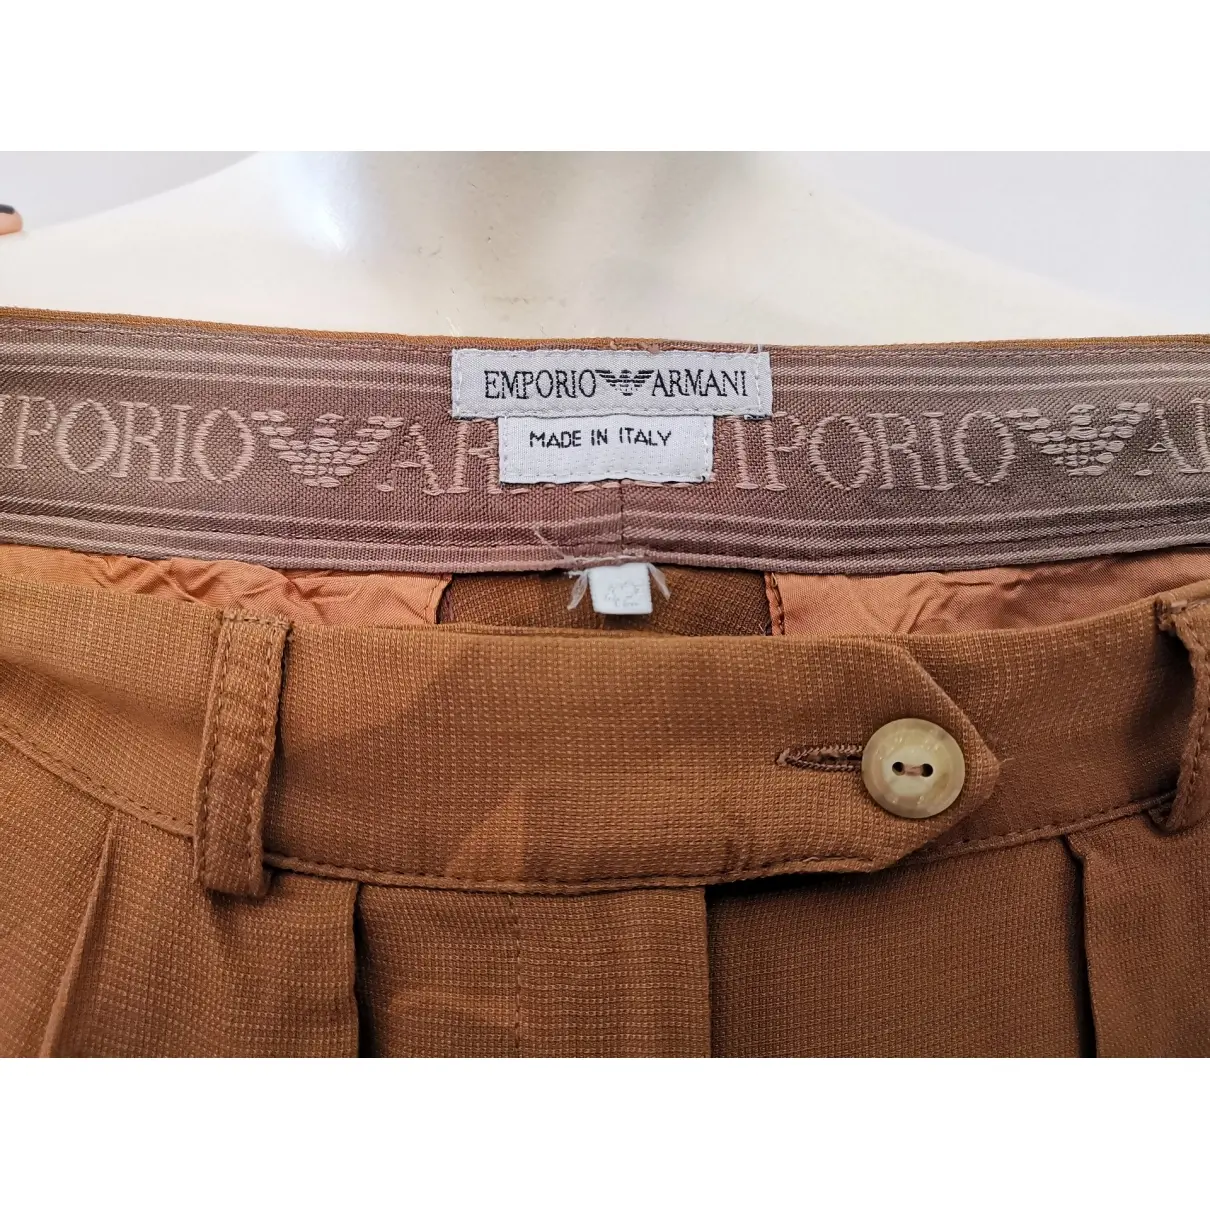 Buy Emporio Armani Trousers online - Vintage